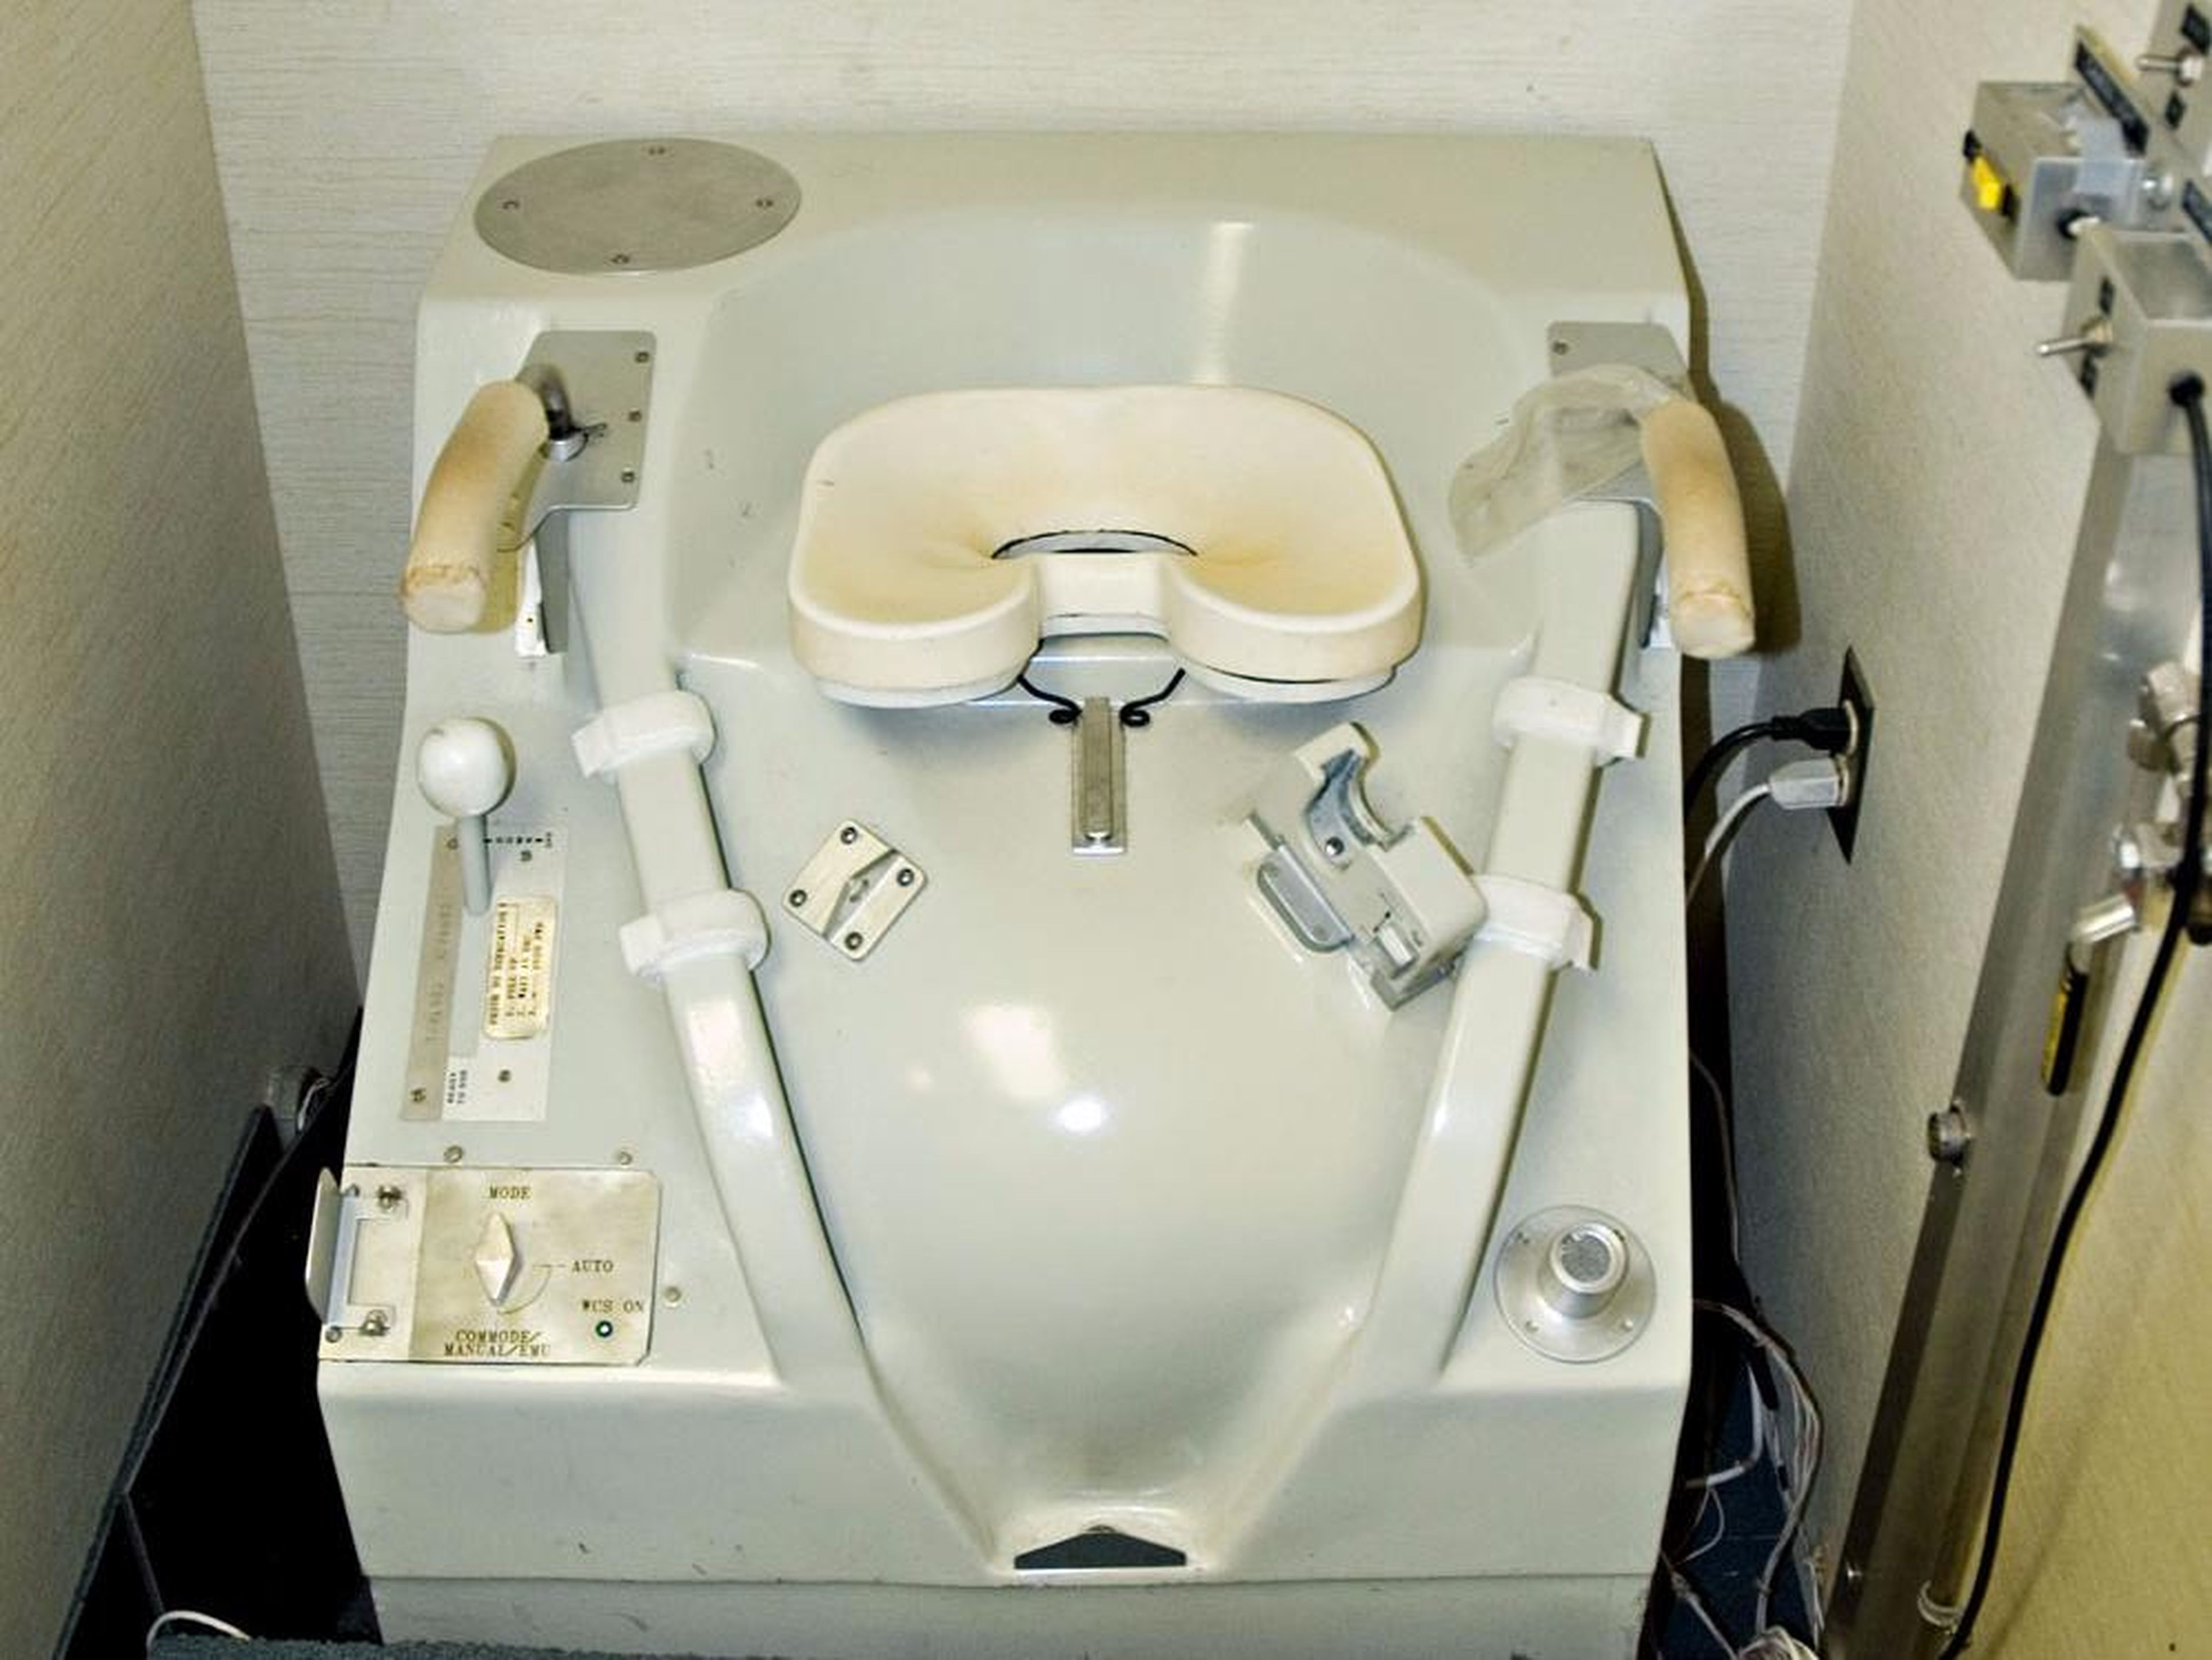 A space shuttle toilet simulator.